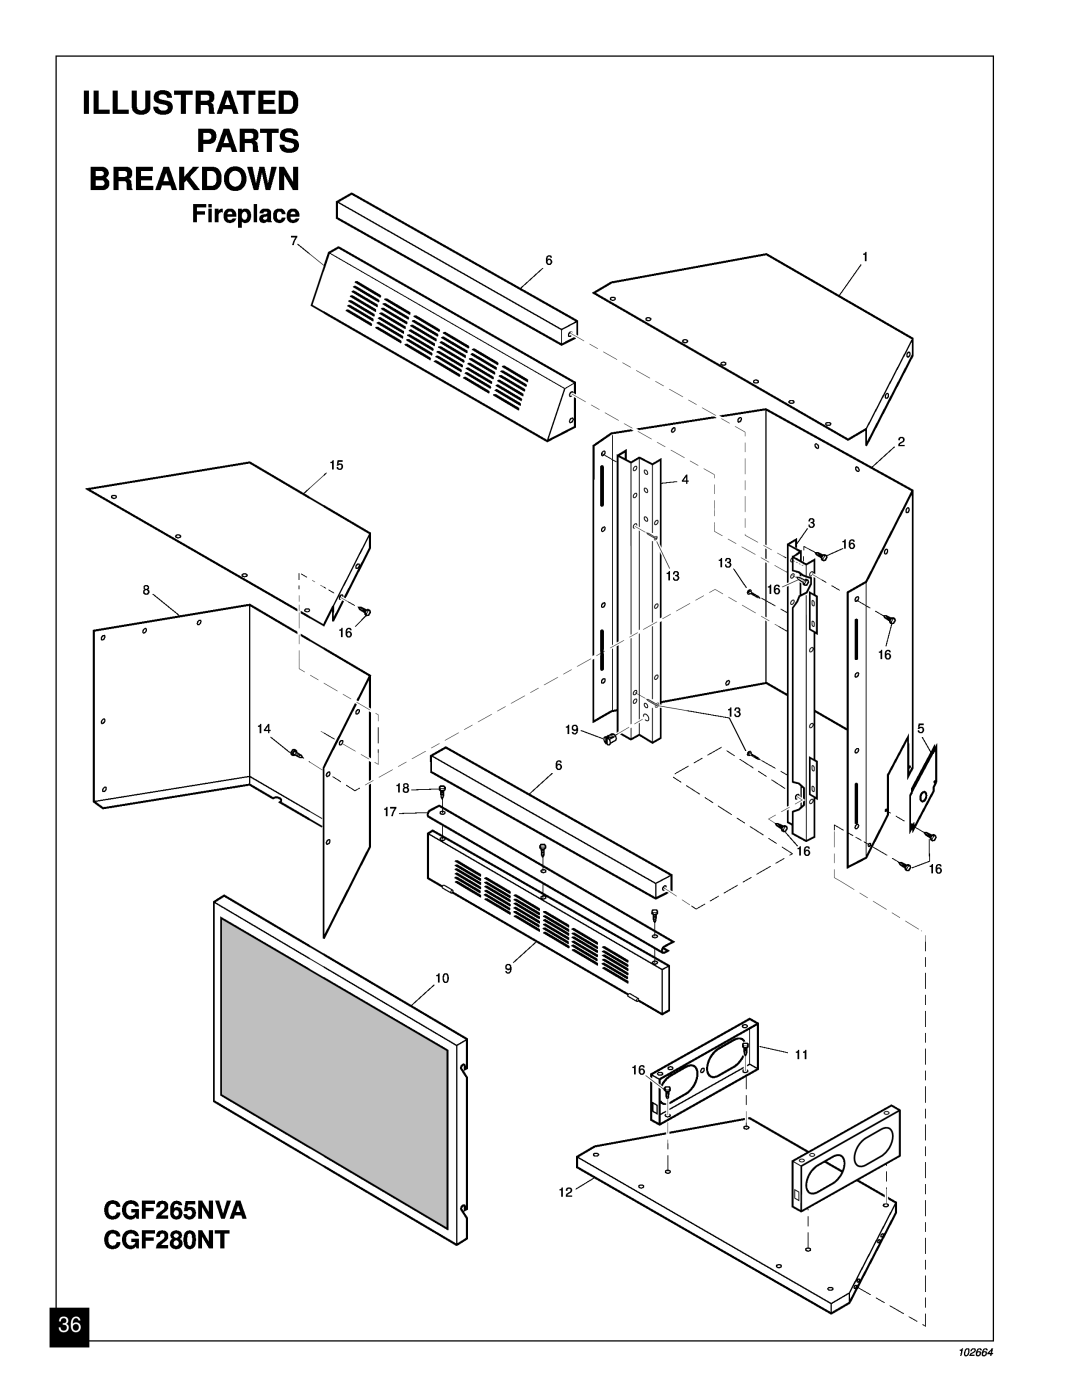 Desa Tech CGF265NVA installation manual Fireplace, CGF280NT, Illustrated, Parts, Breakdown 